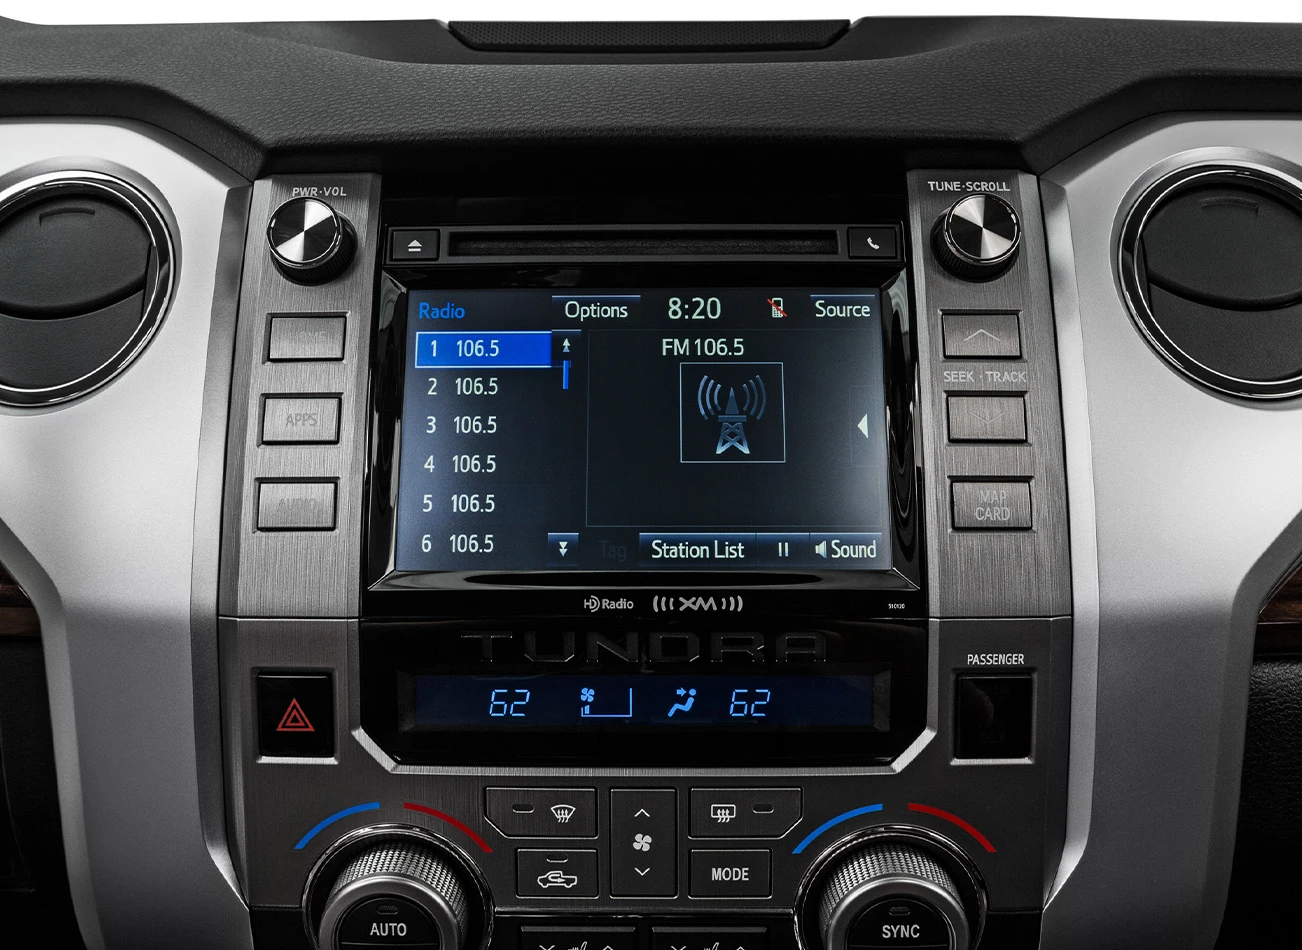 2016 Toyota Tundra: Infotainment screen | CarMax